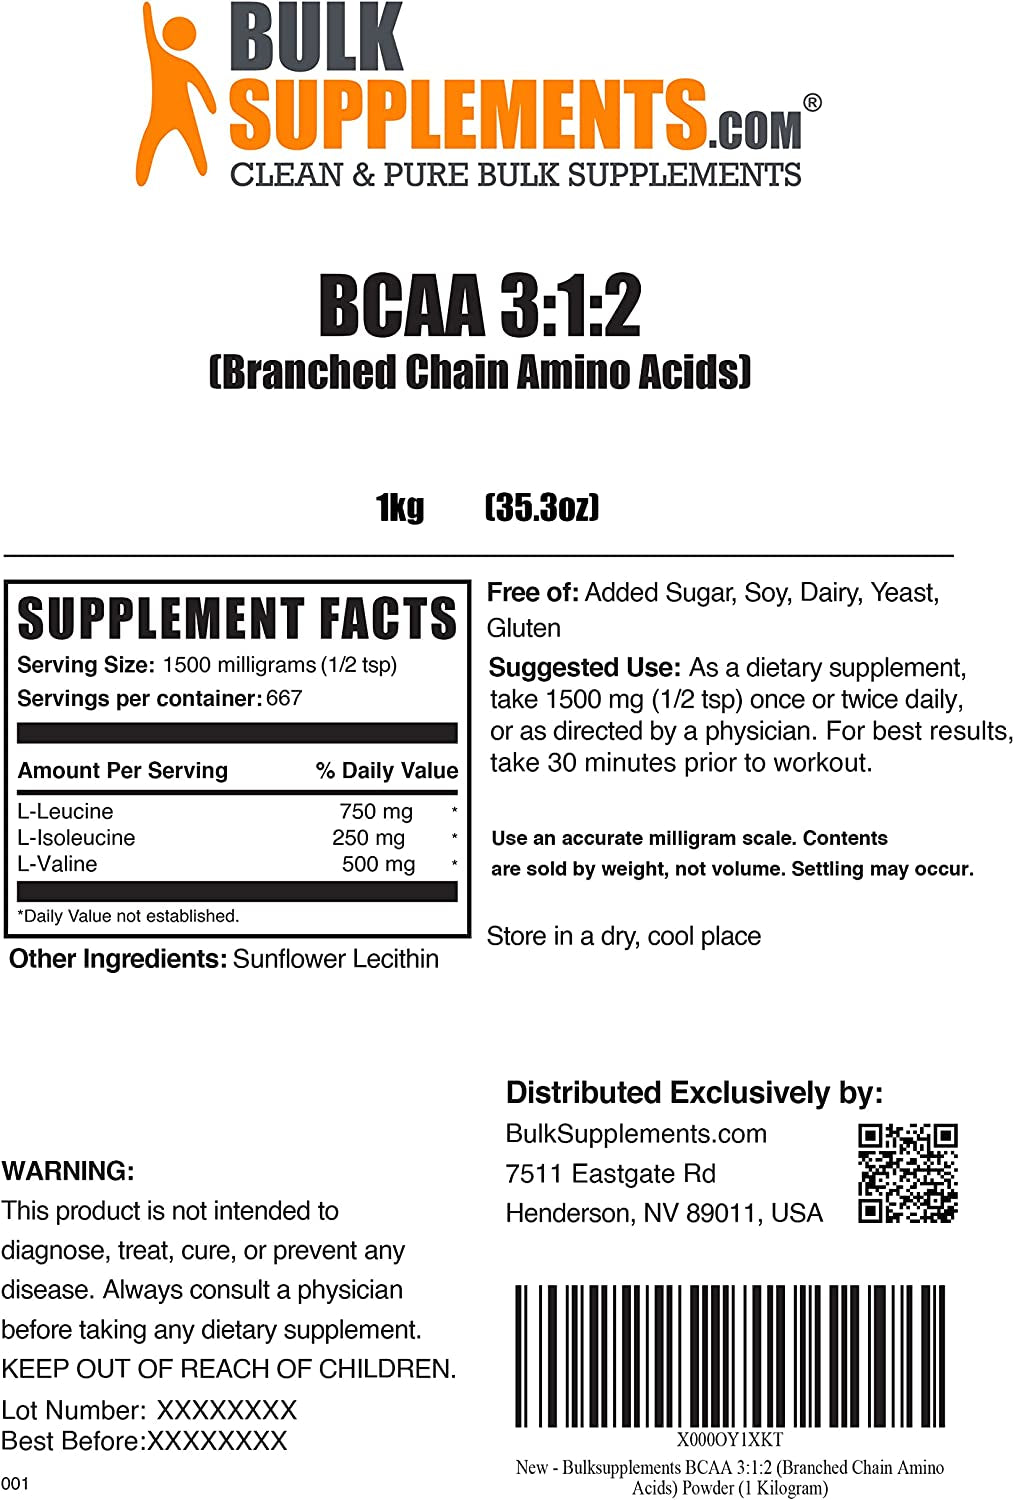 BULKSUPPLEMENTS.COM BCAA 3:1:2 Powder 1Kg, Creatine Powder 500G, Beta Alanine Powder 500G, & L-Glutamine Powder 1Kg (Pack of 4) Bundle